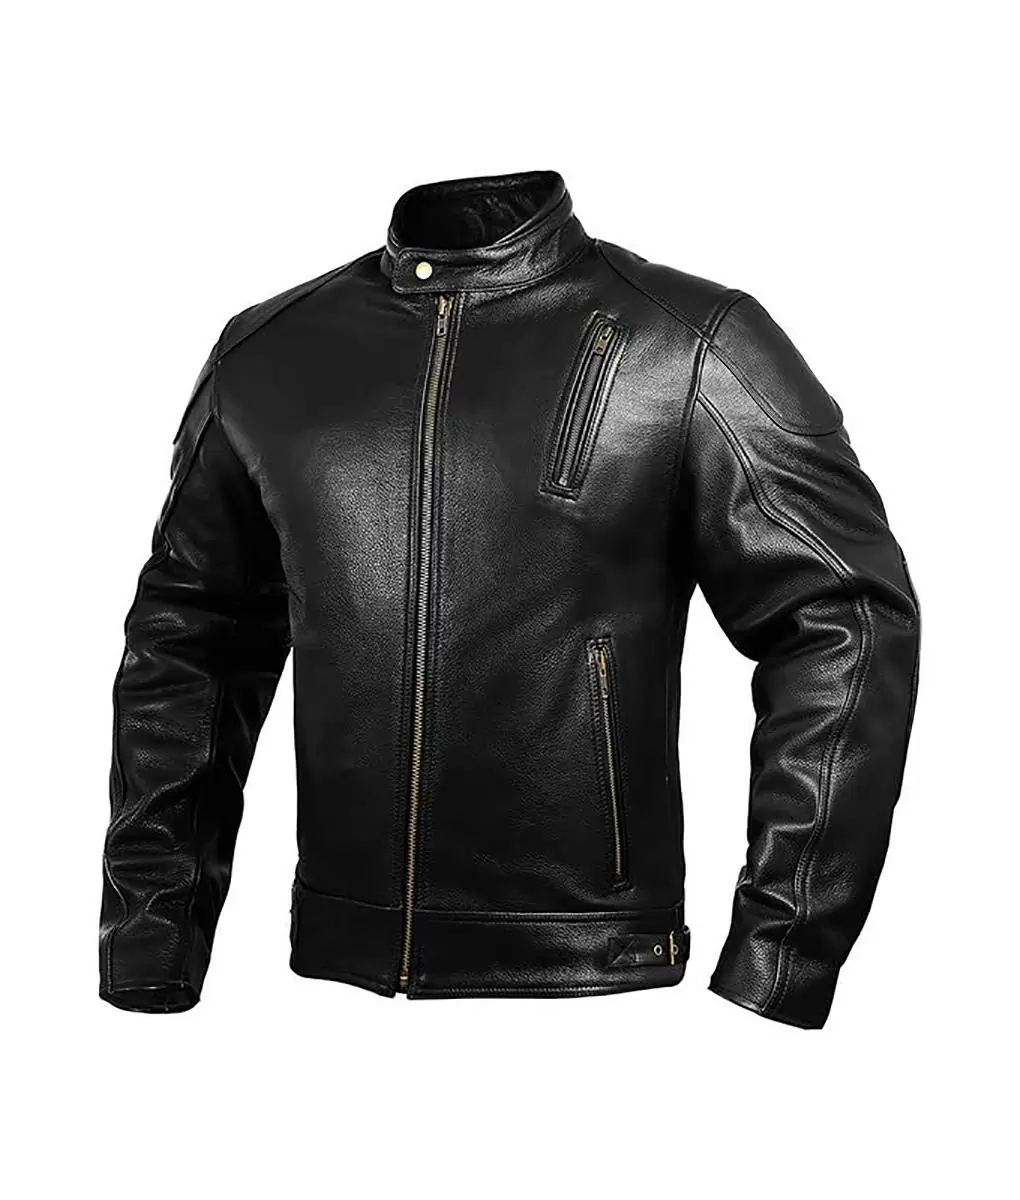 Mens Leather Motorcycle Jackets Black Moto Riding Motorbike Racing Cafe Racer Biker Jacket - Dominic